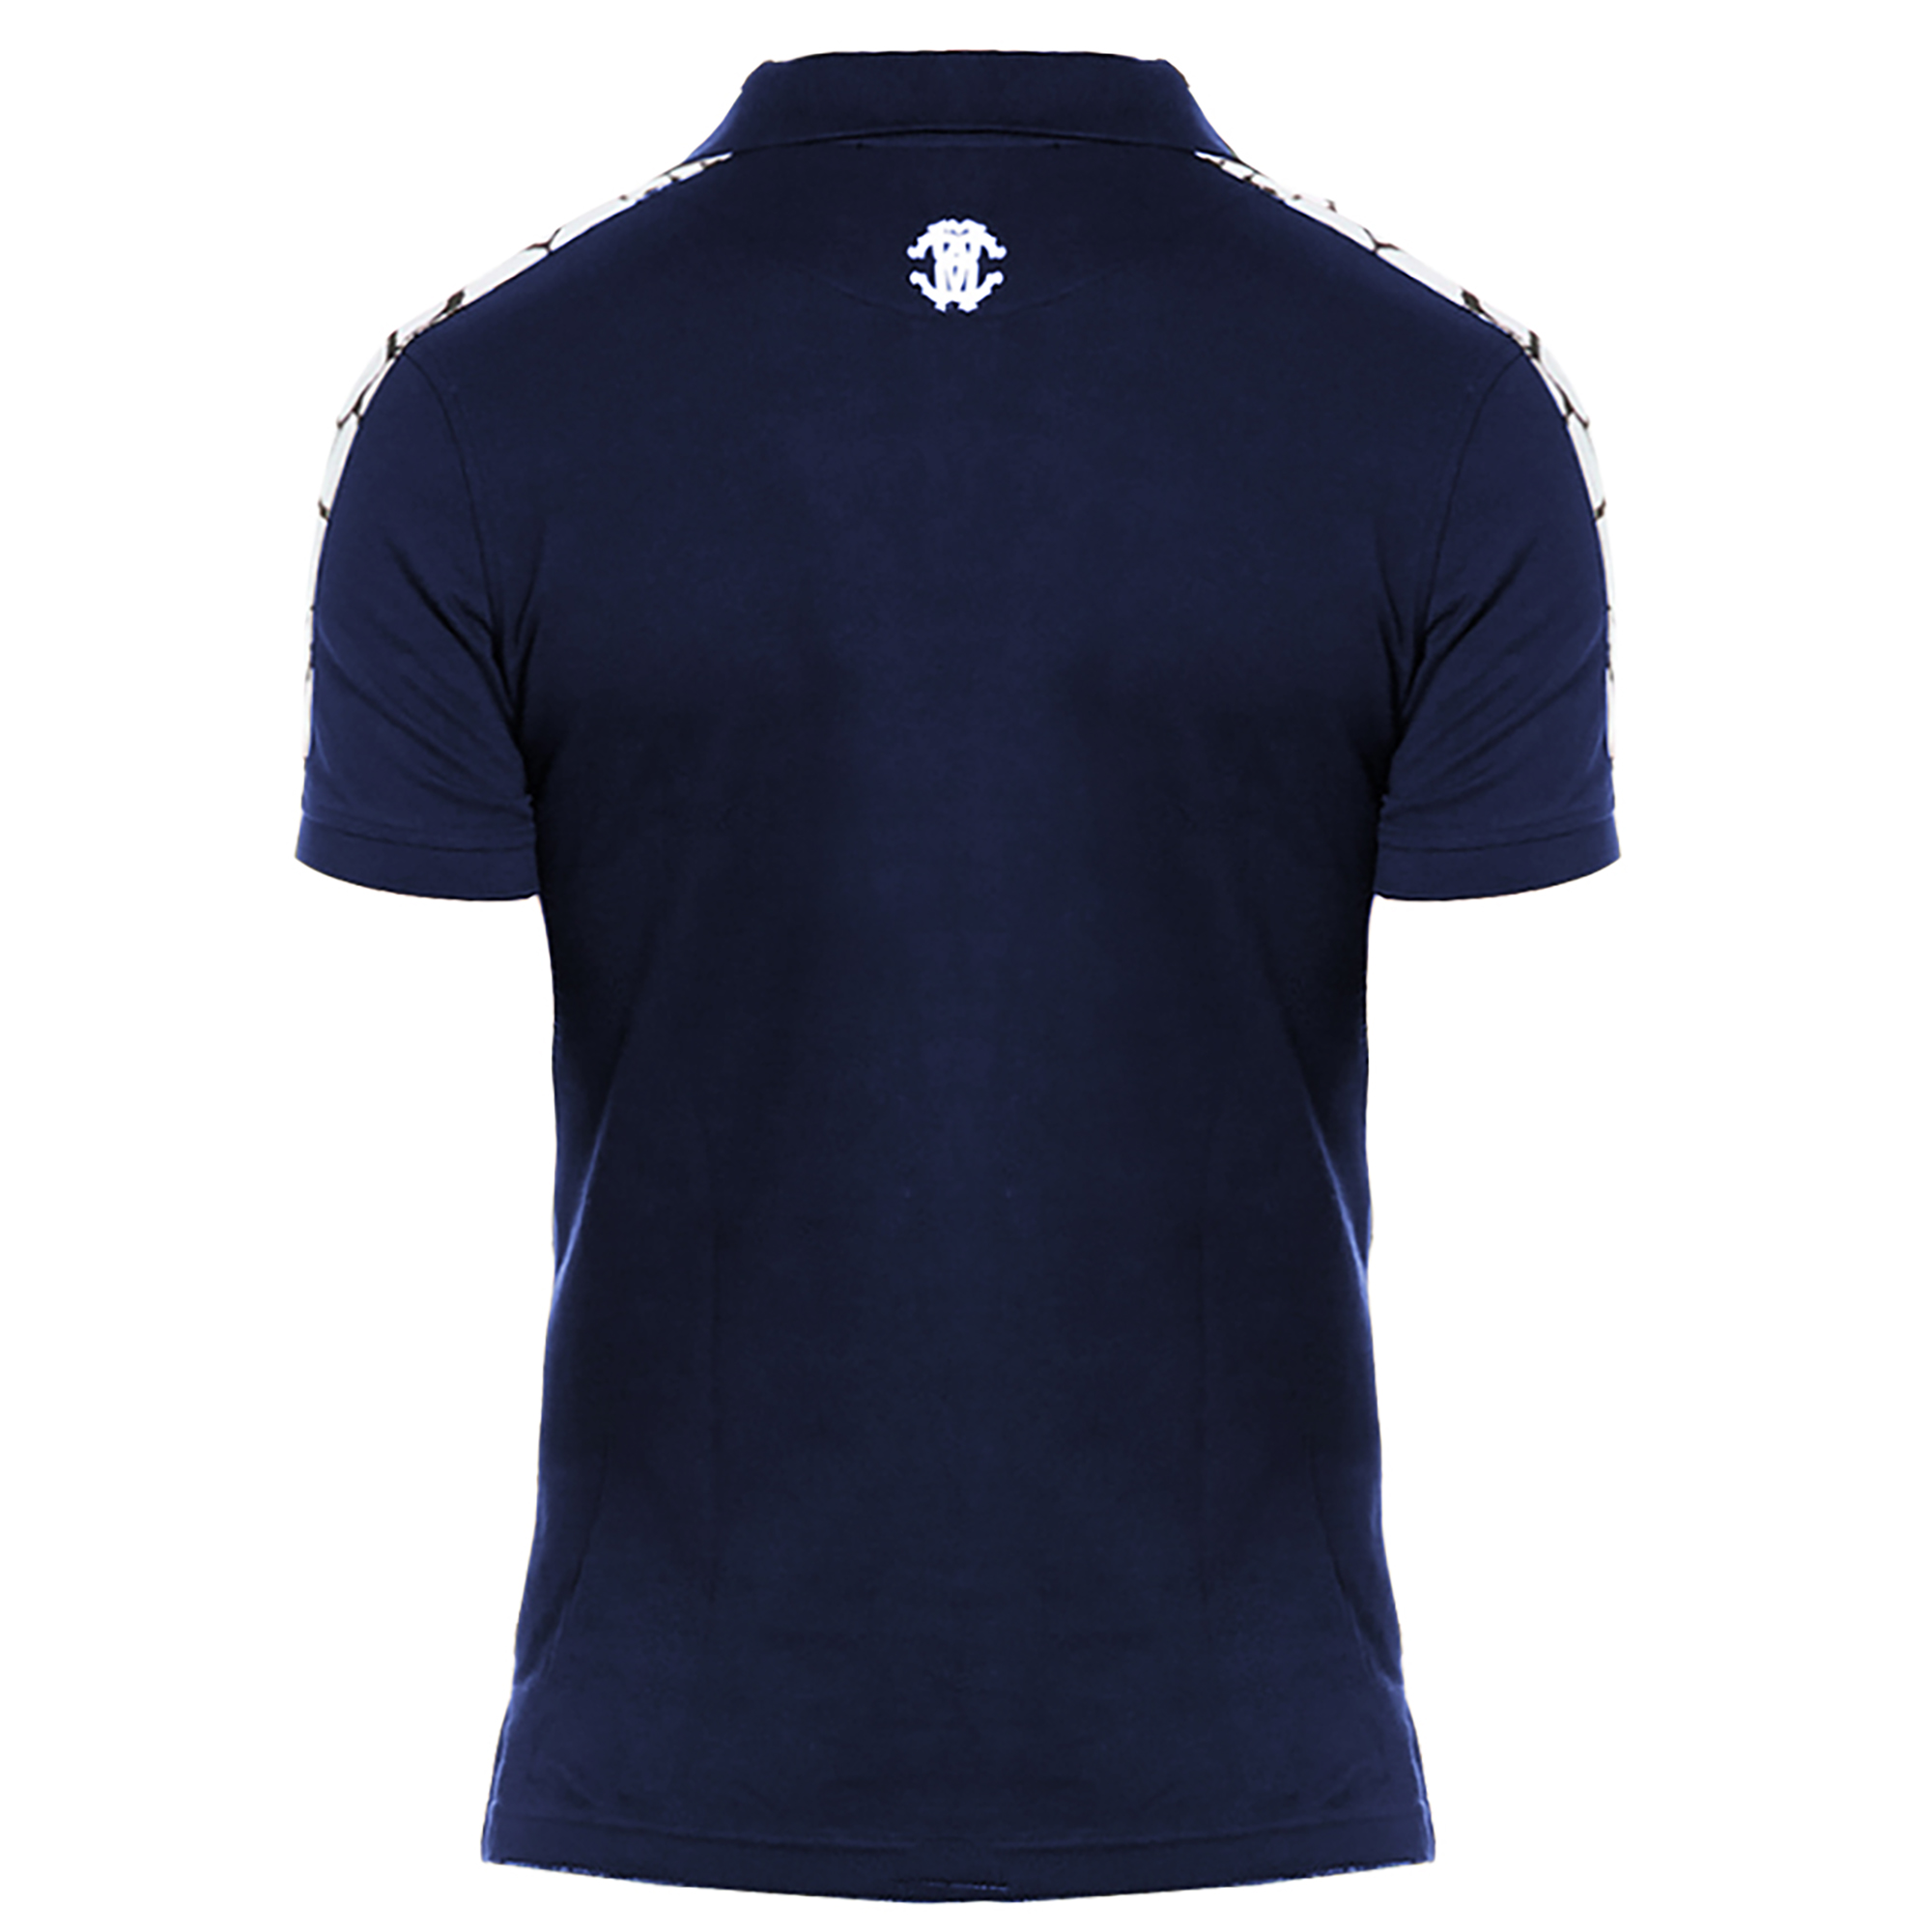 ROBERTO CAVALLI Men's Blue Stretch Cotton Half Zip Polo T-Shirt (XXL) - image 2 of 2